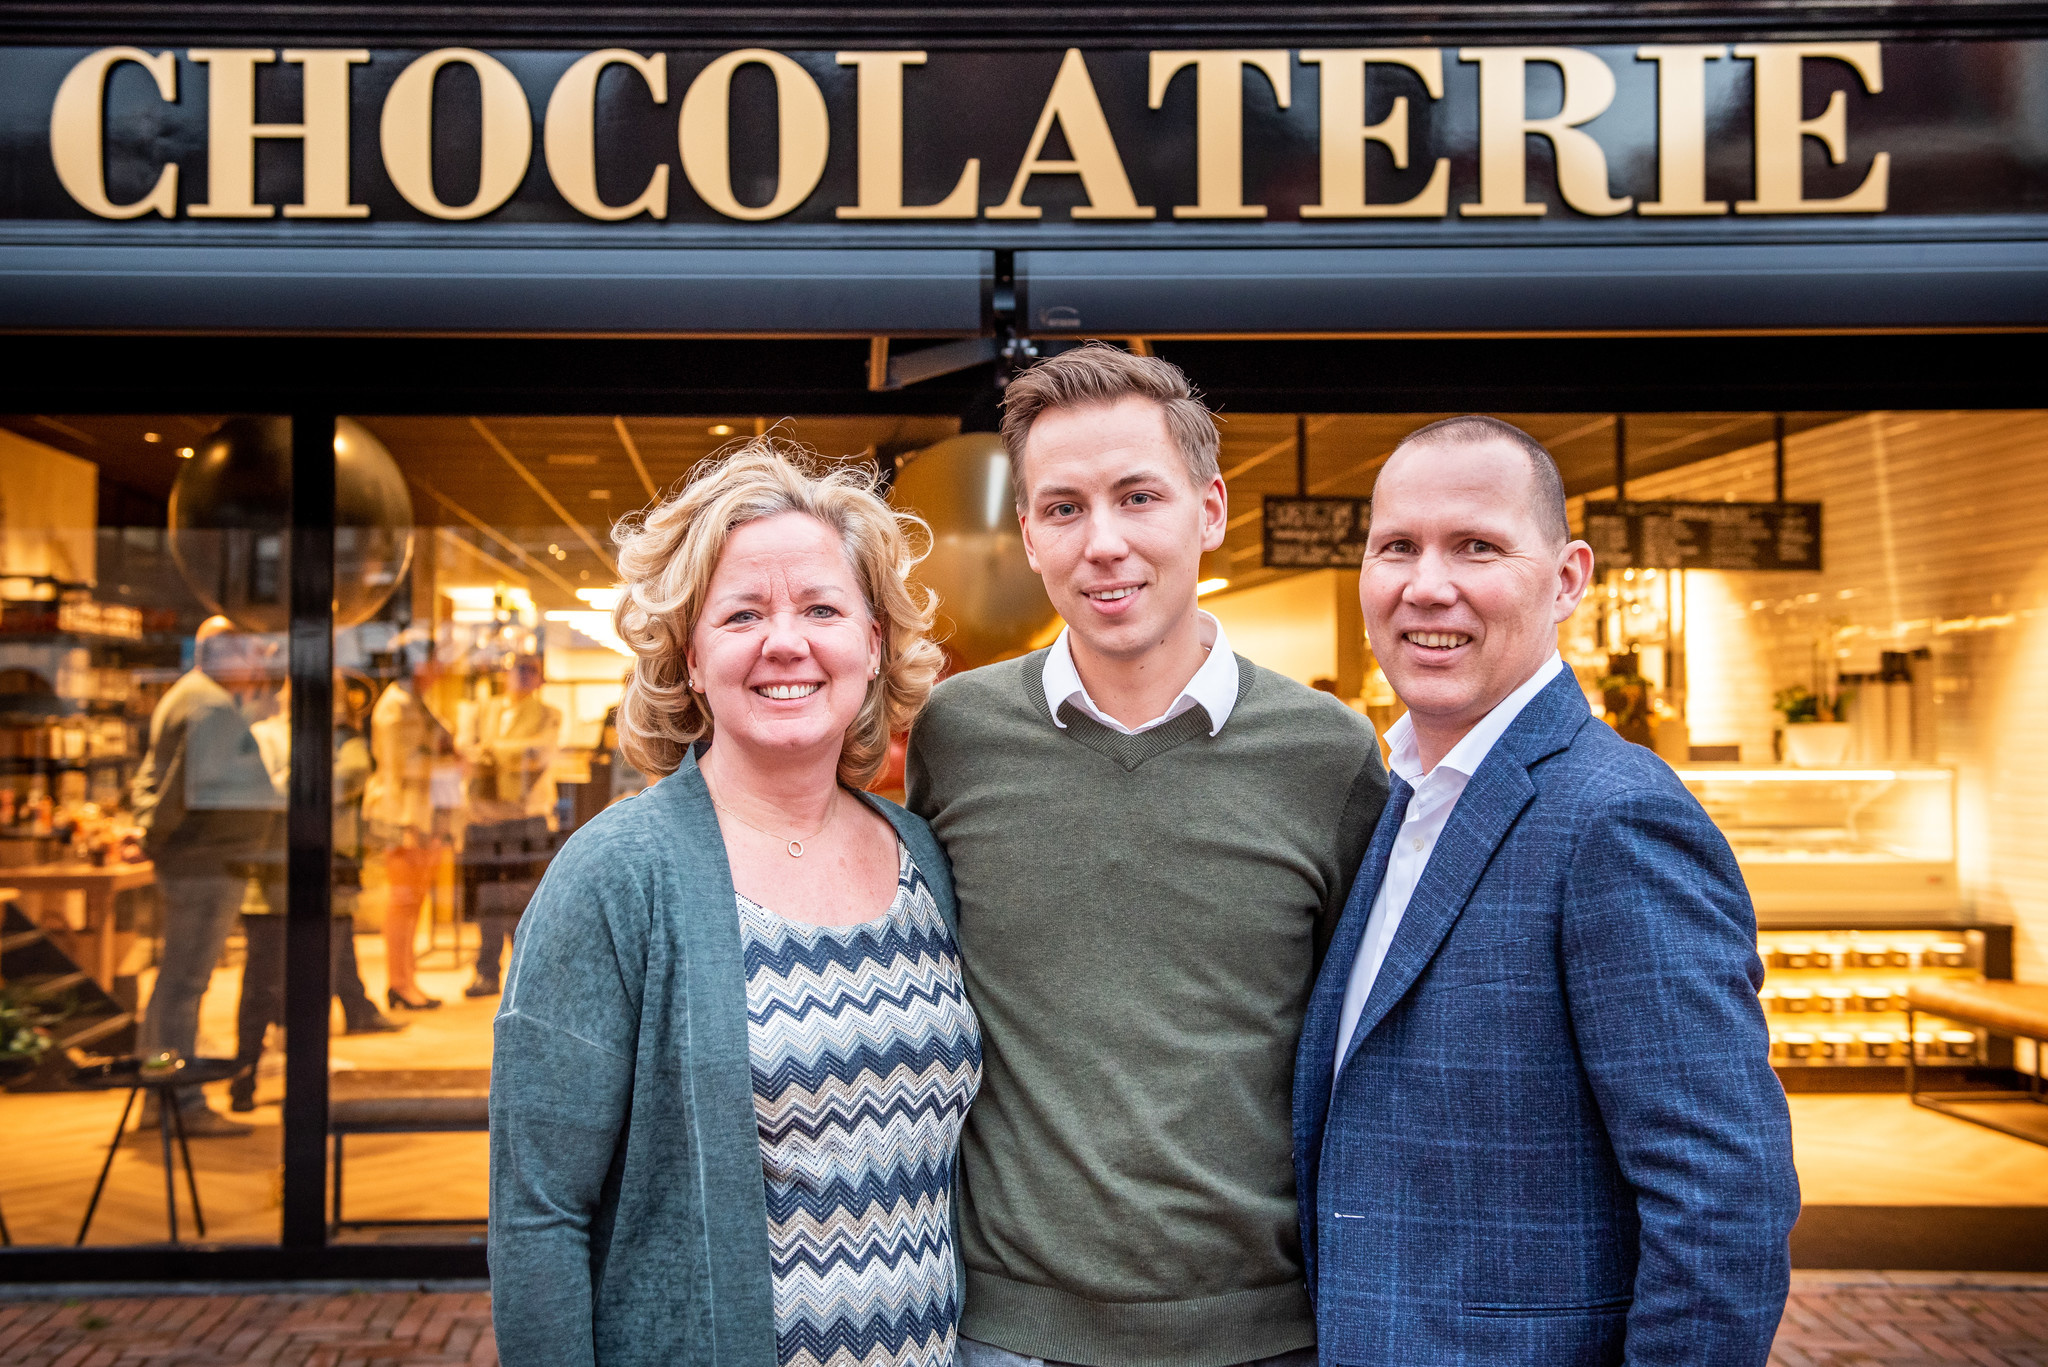 eigenaar chocolaterie pierre - Gert, Karin en Jeffrey van Soest